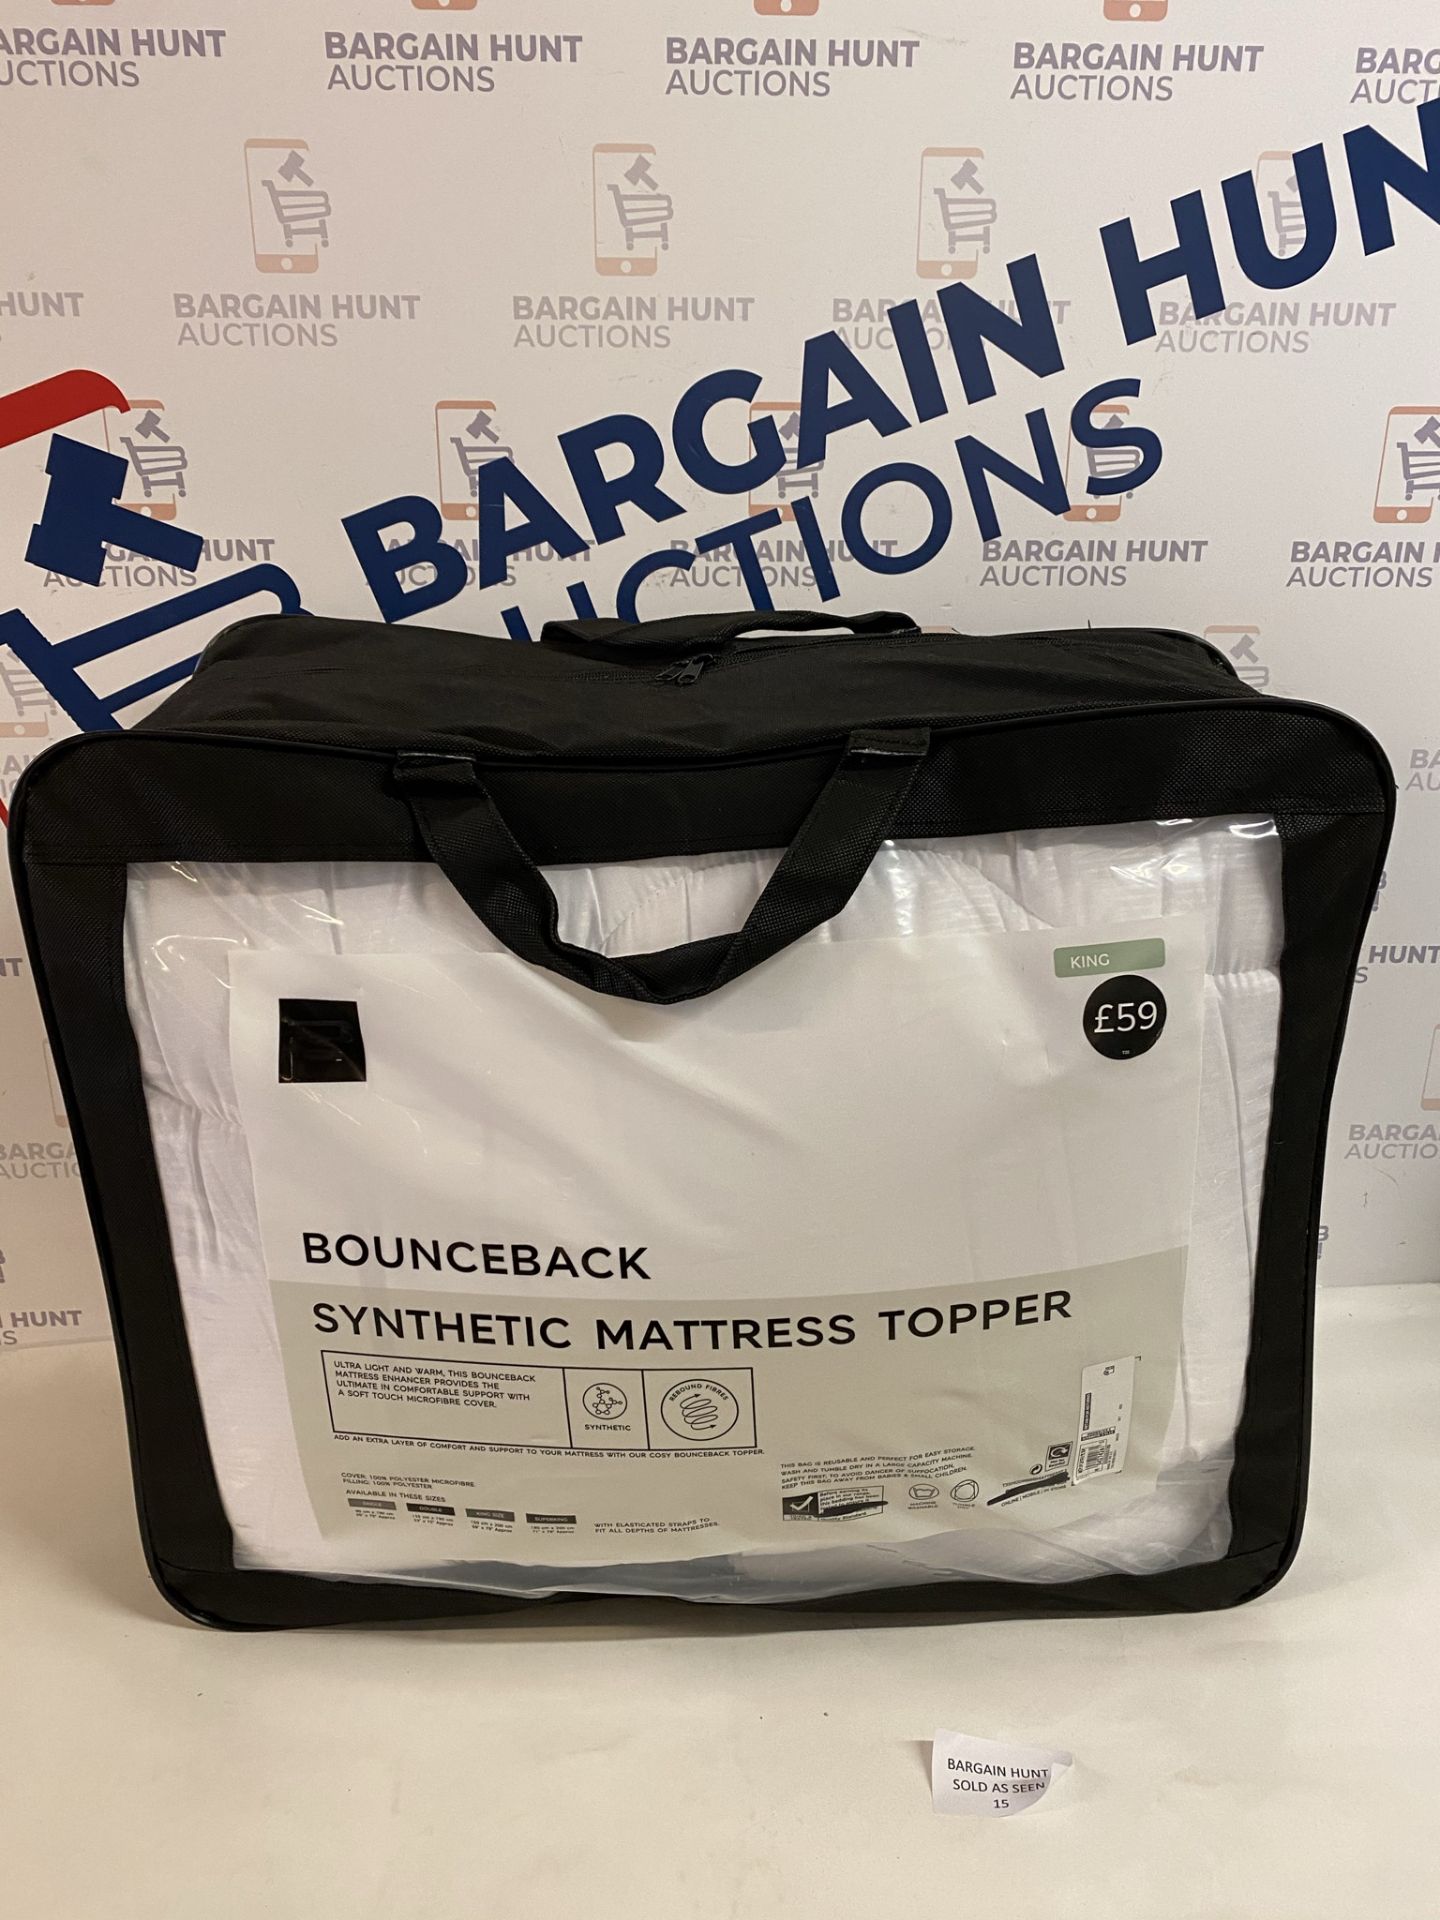 Bounceback Synthetic Mattress Topper, King Size RRP £59